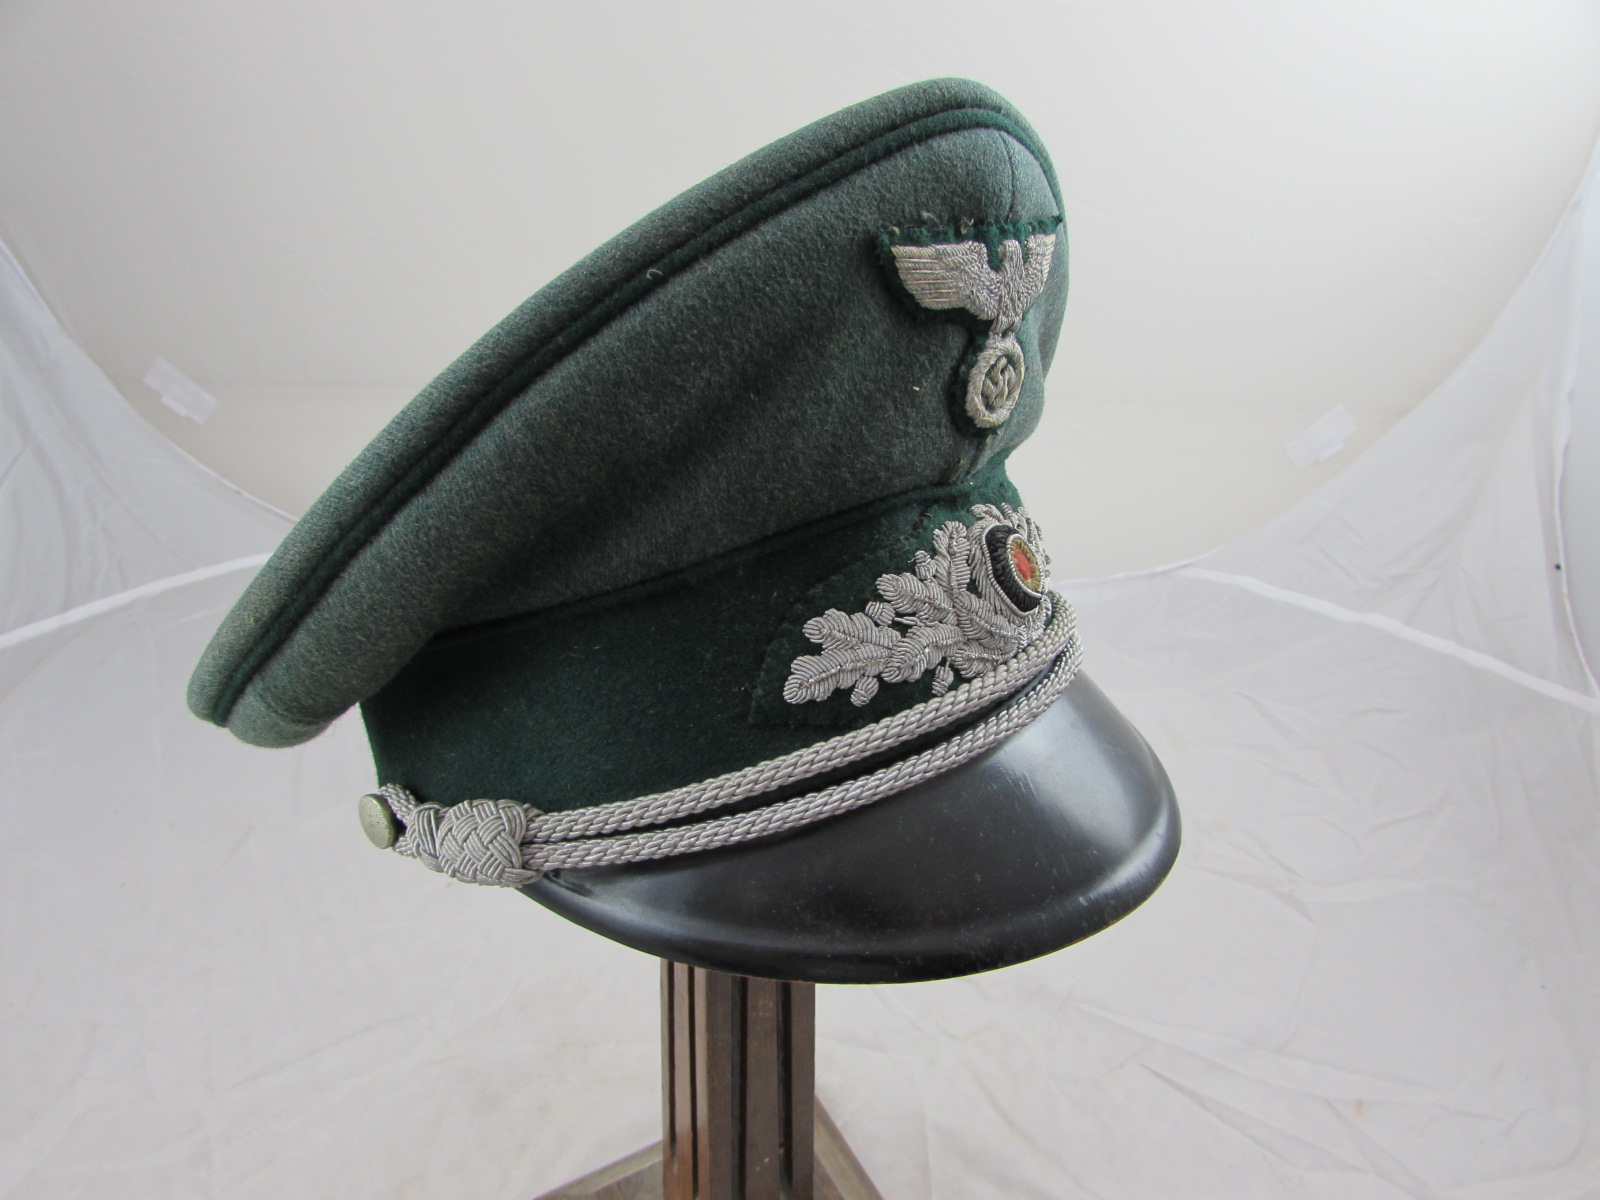 WW2 German Forestry Officer's Visor Cap (original)